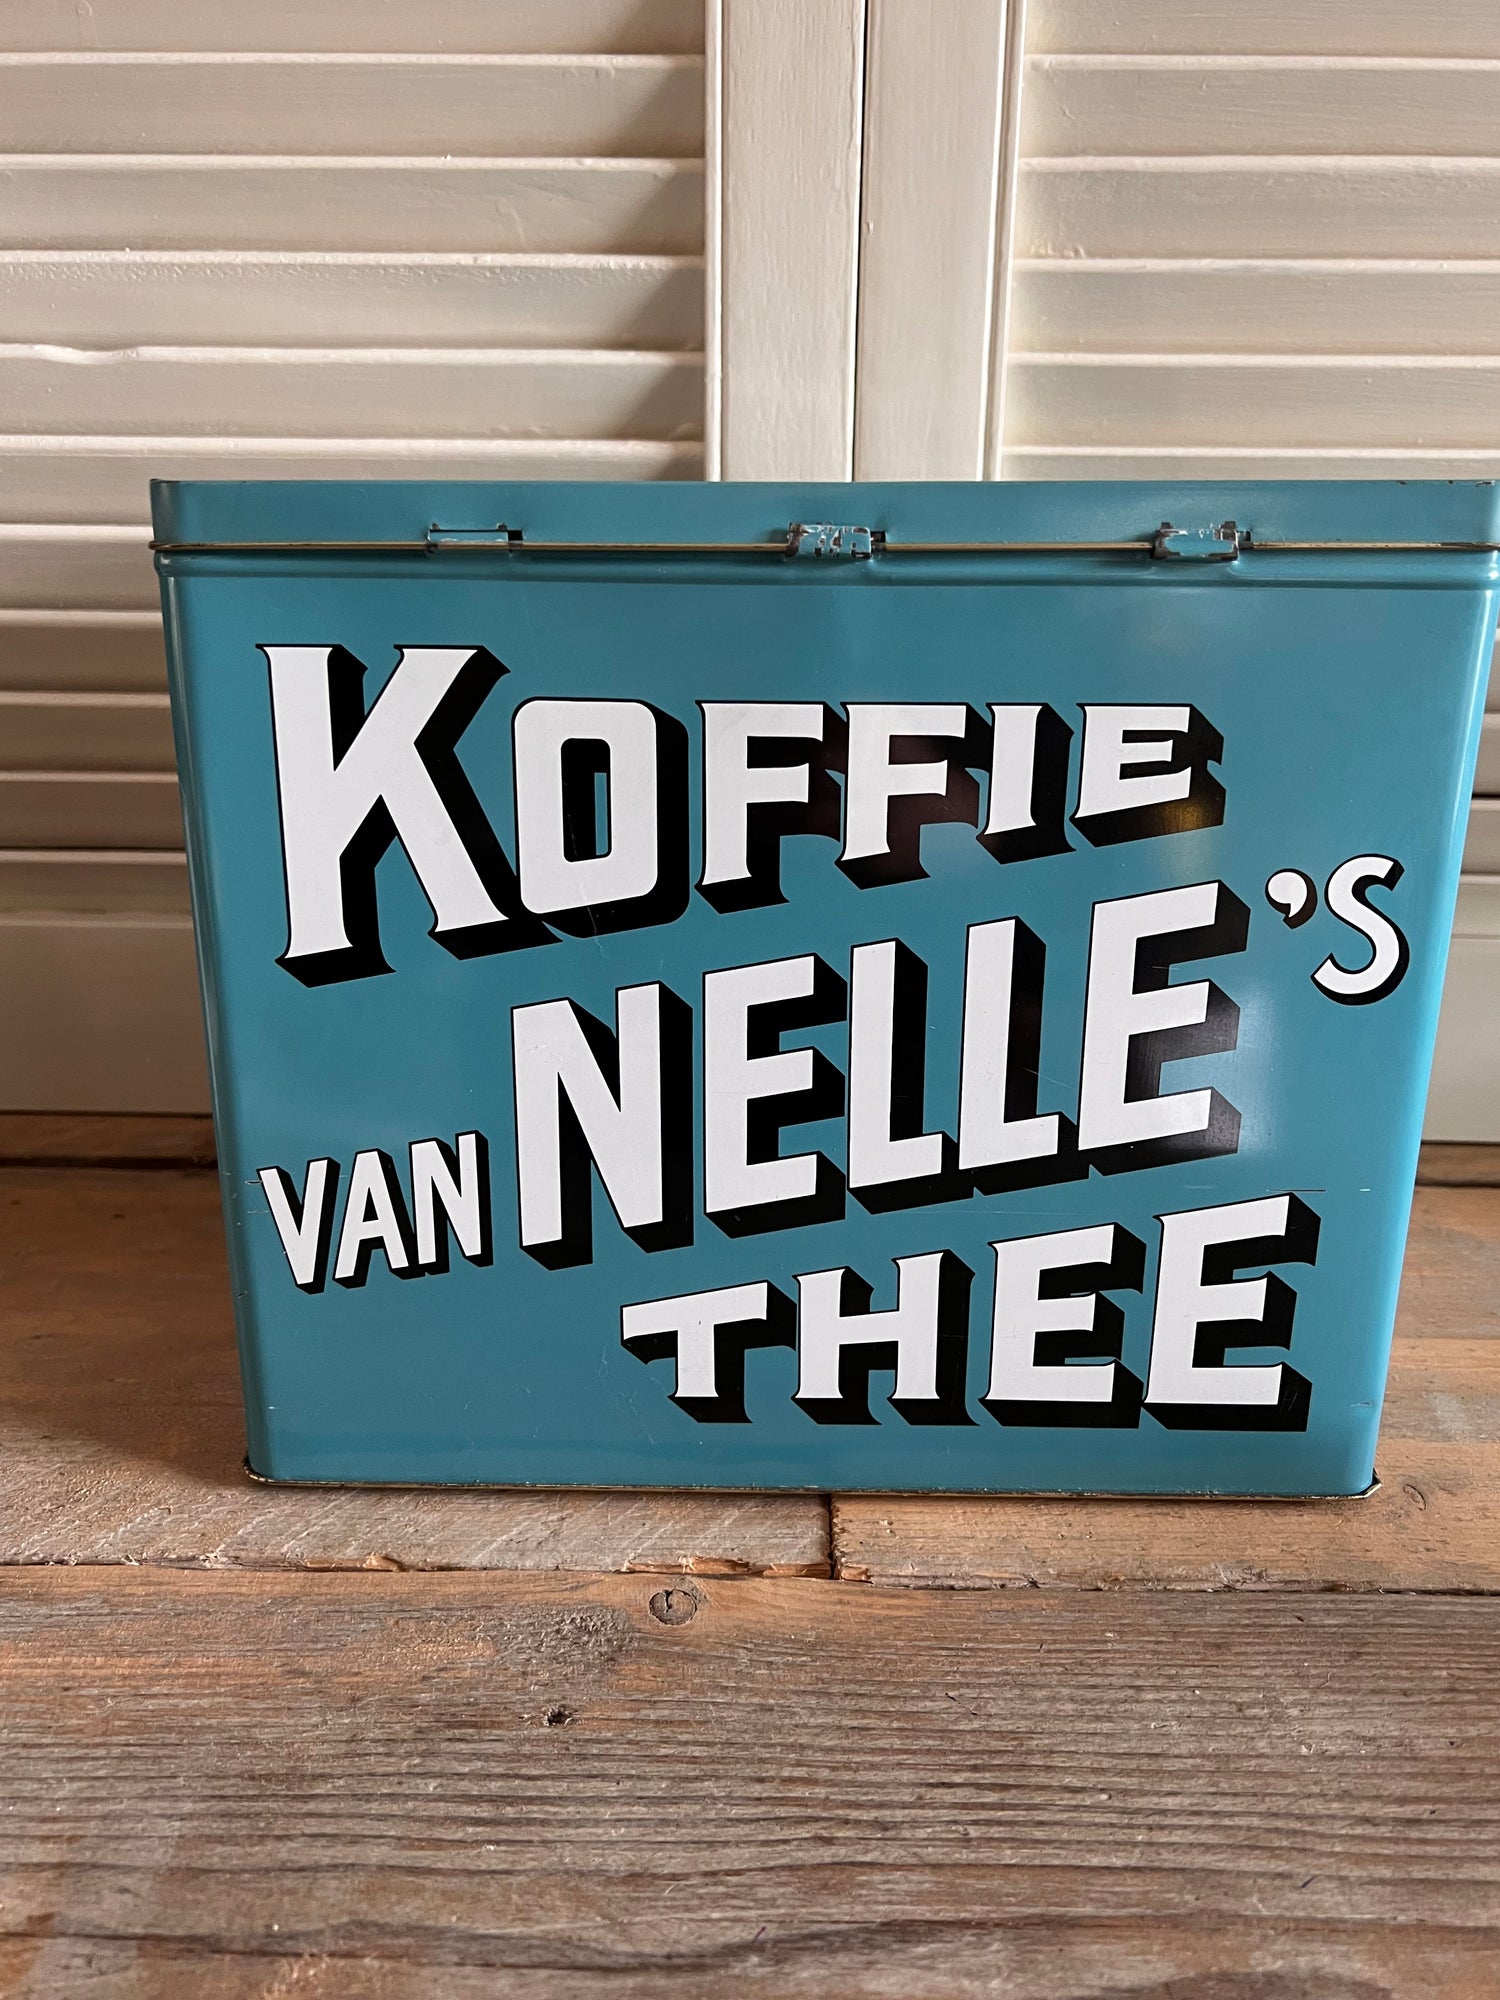 Groot Van Nelle koffielbik